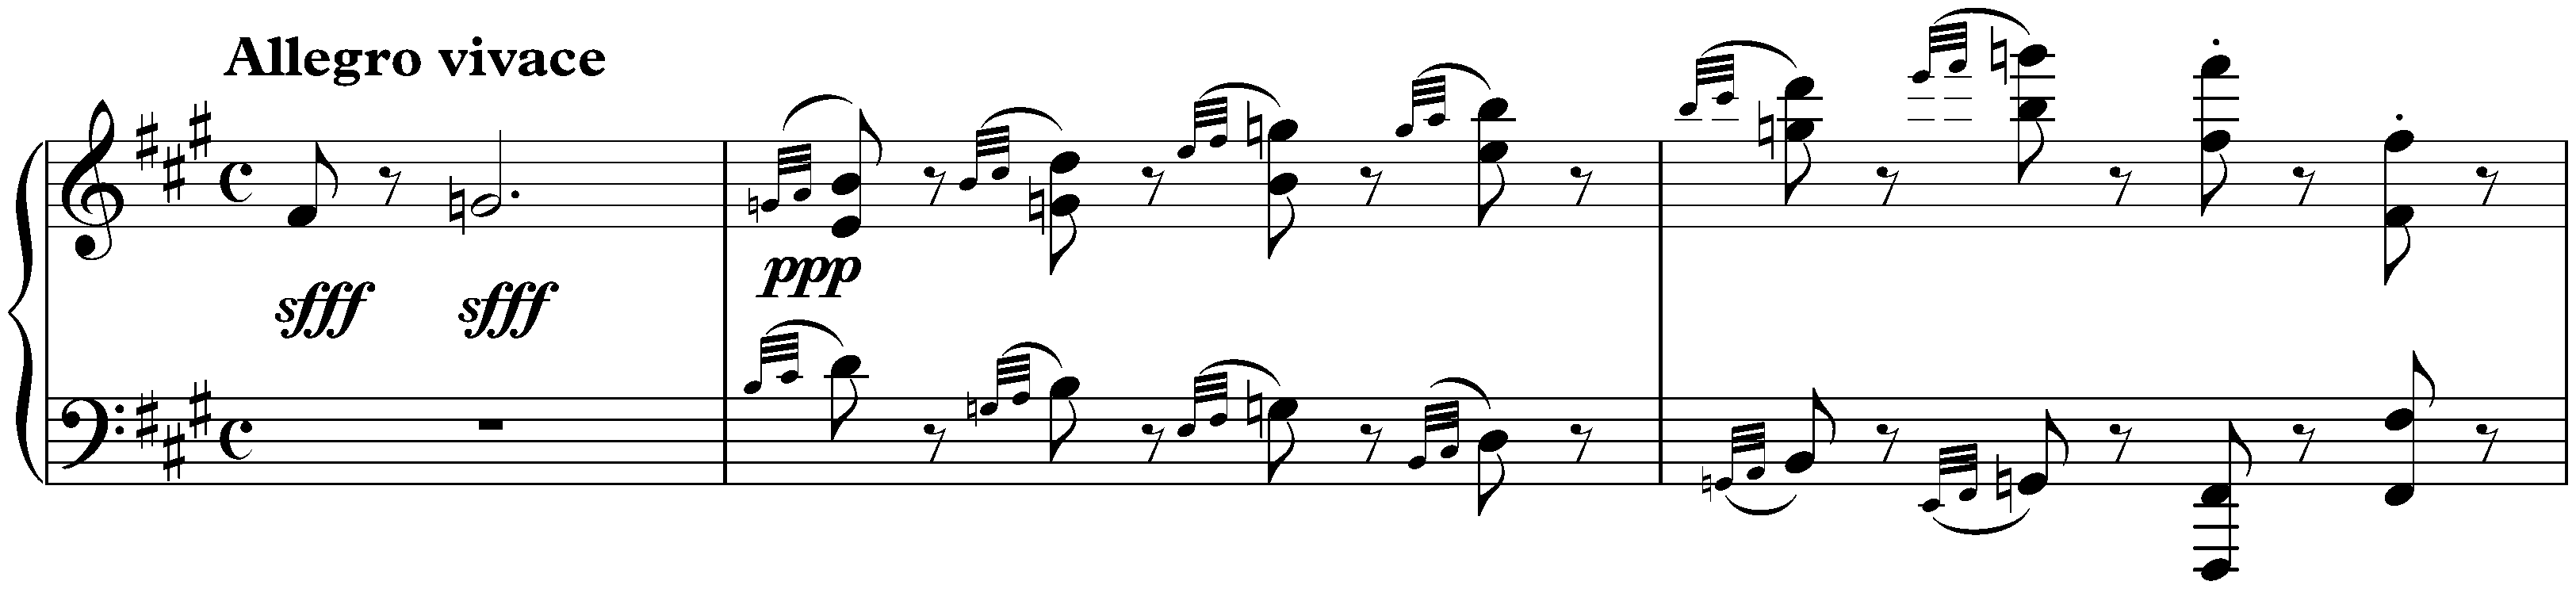 Morceaux de fantaisie, op. 3; 4. Polichinelle in F-sharp minor